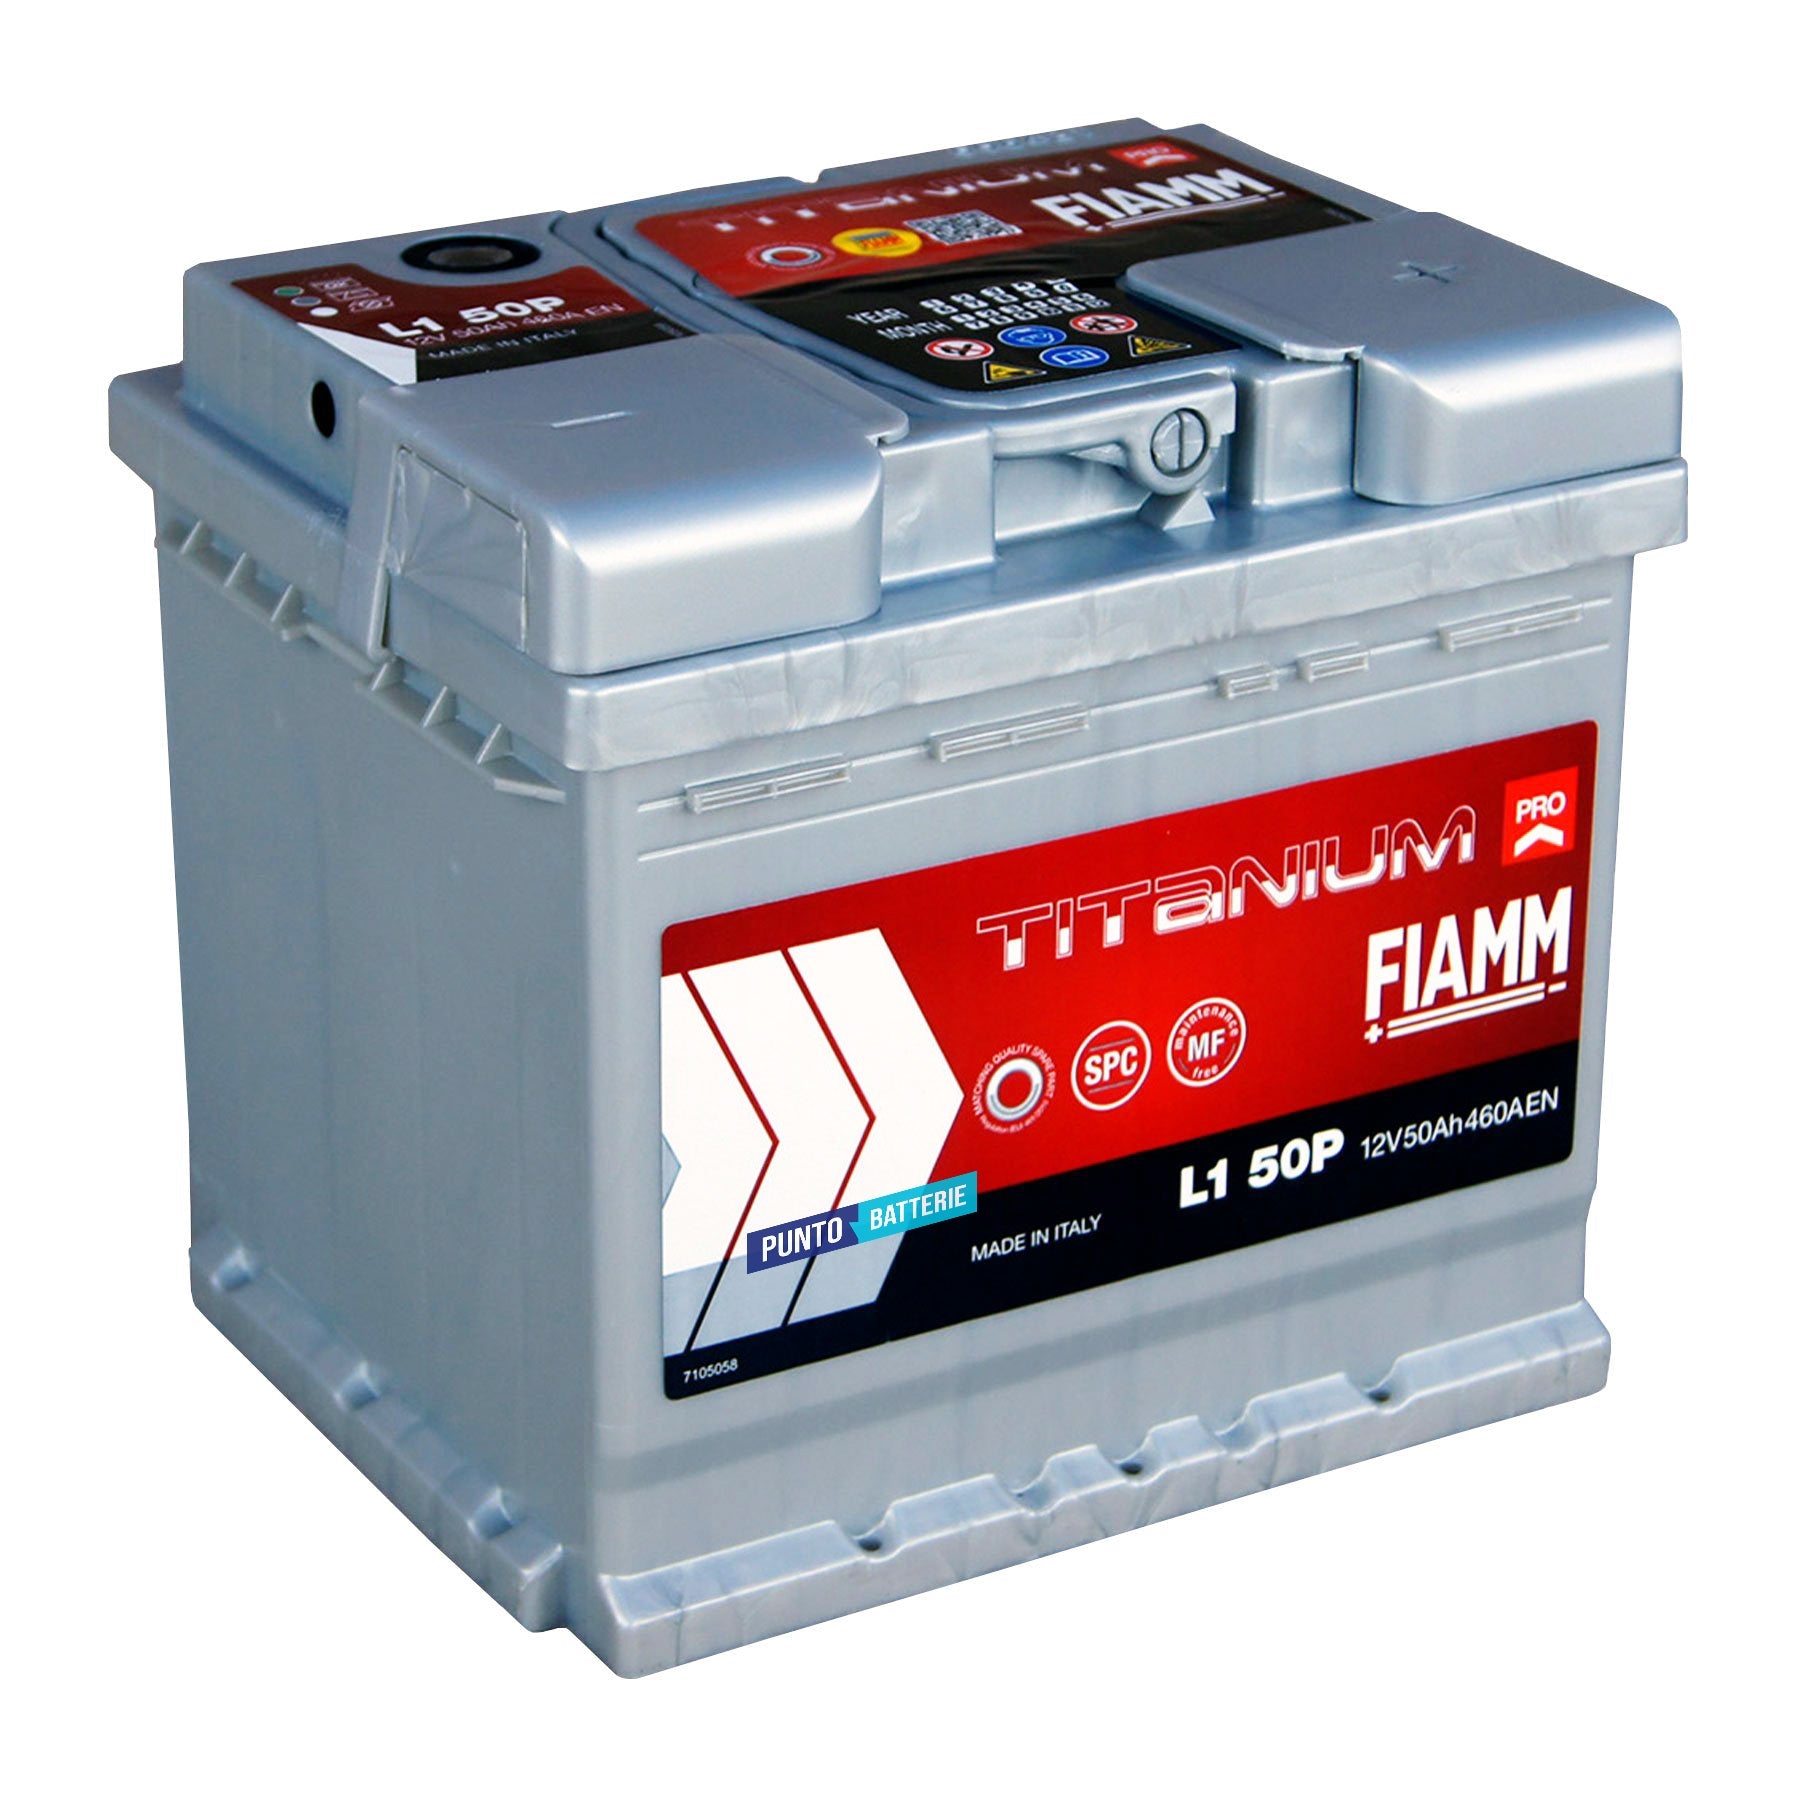 Batteria Fiamm L1 50P - Titanium PRO (12V, 50Ah, 460A) - Puntobatterie